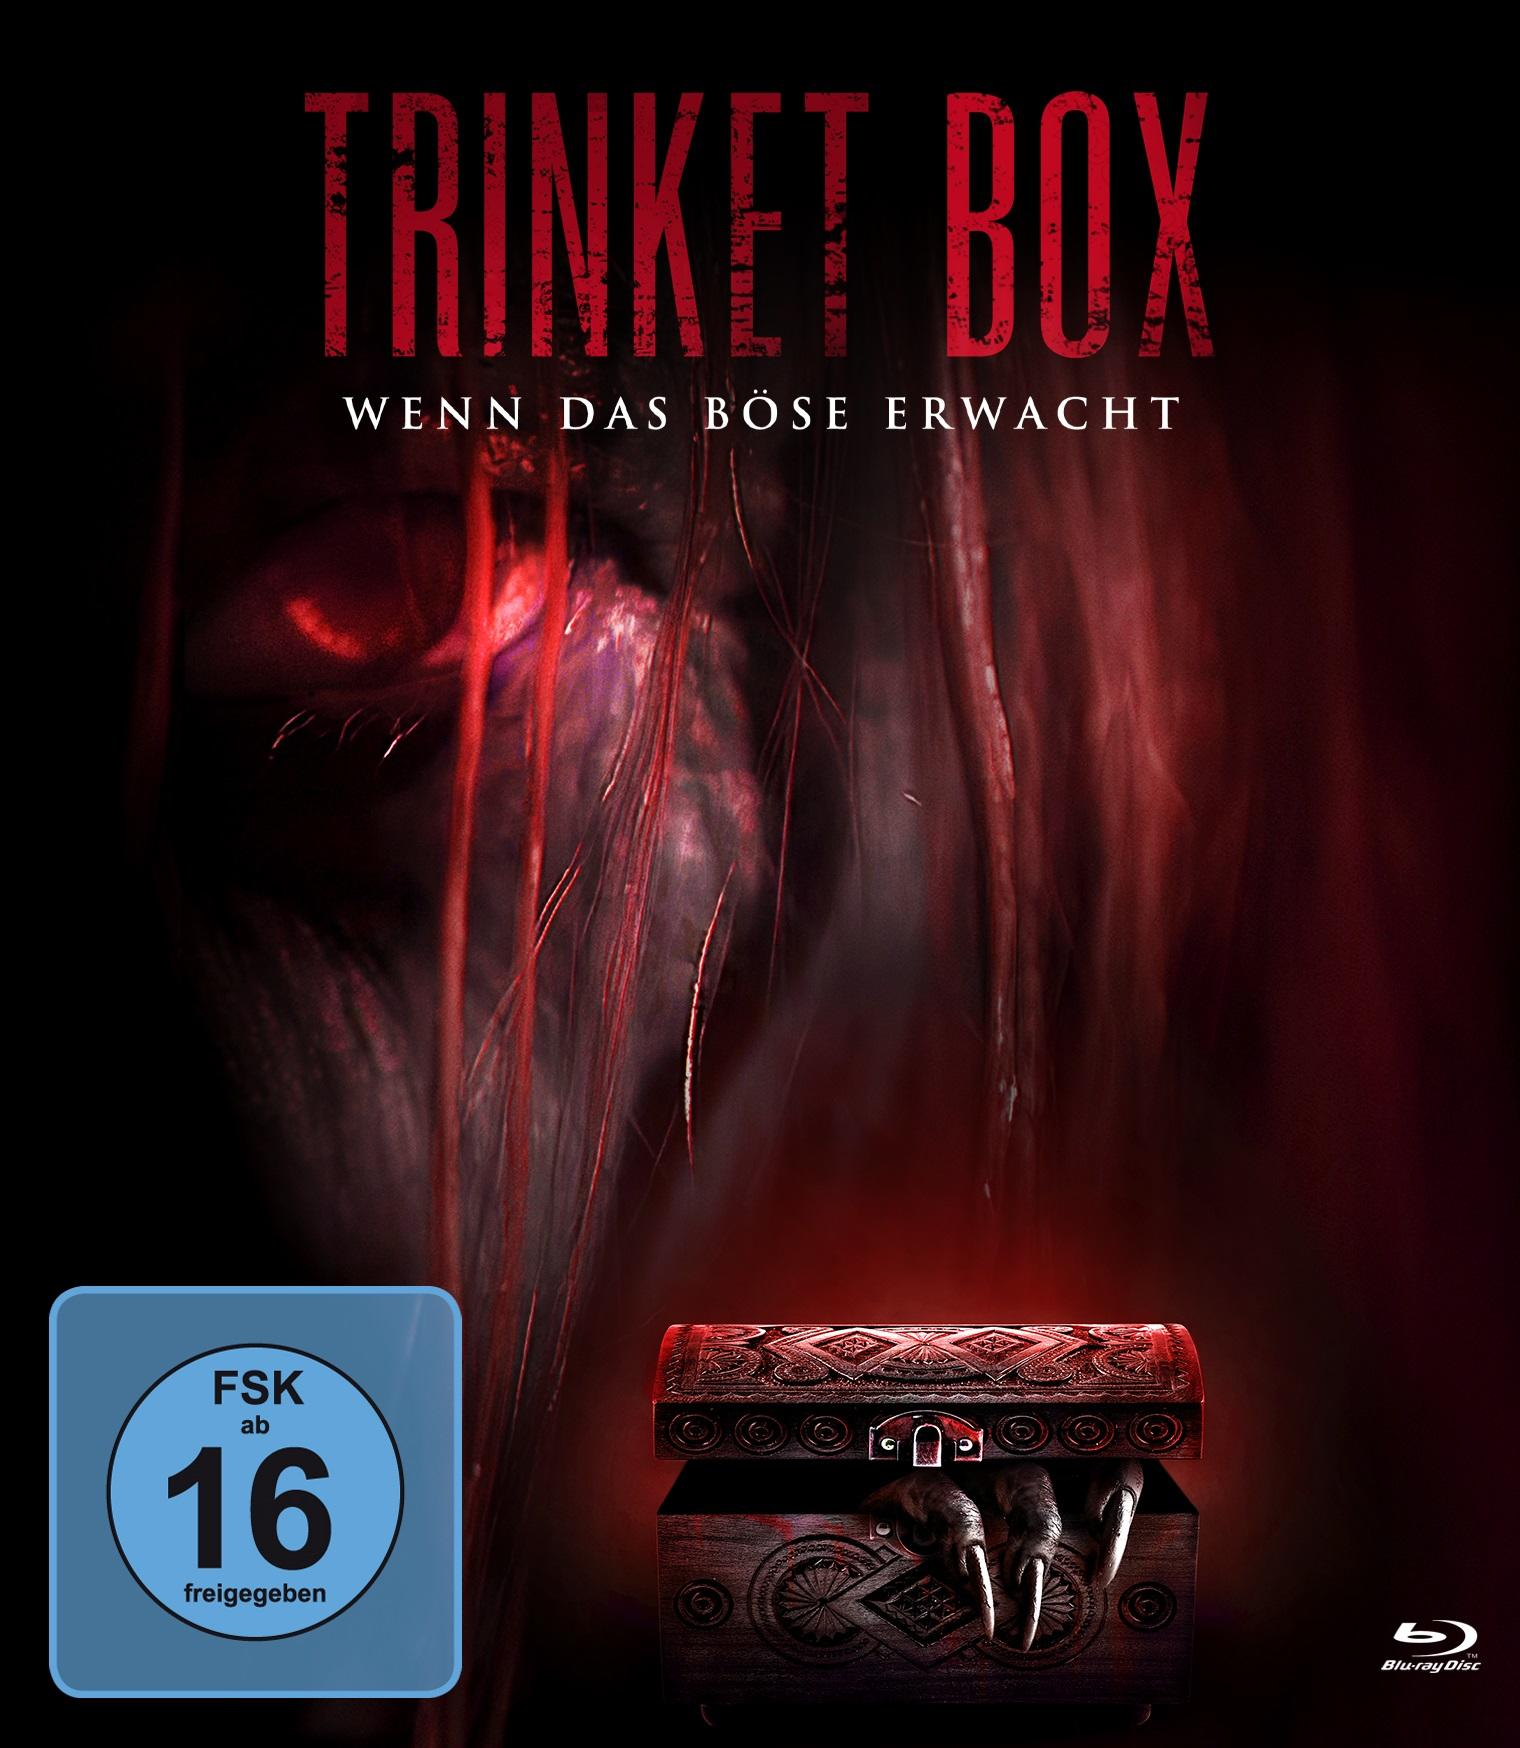 Box Wenn Trinket - Das Erwacht Boese Blu-ray